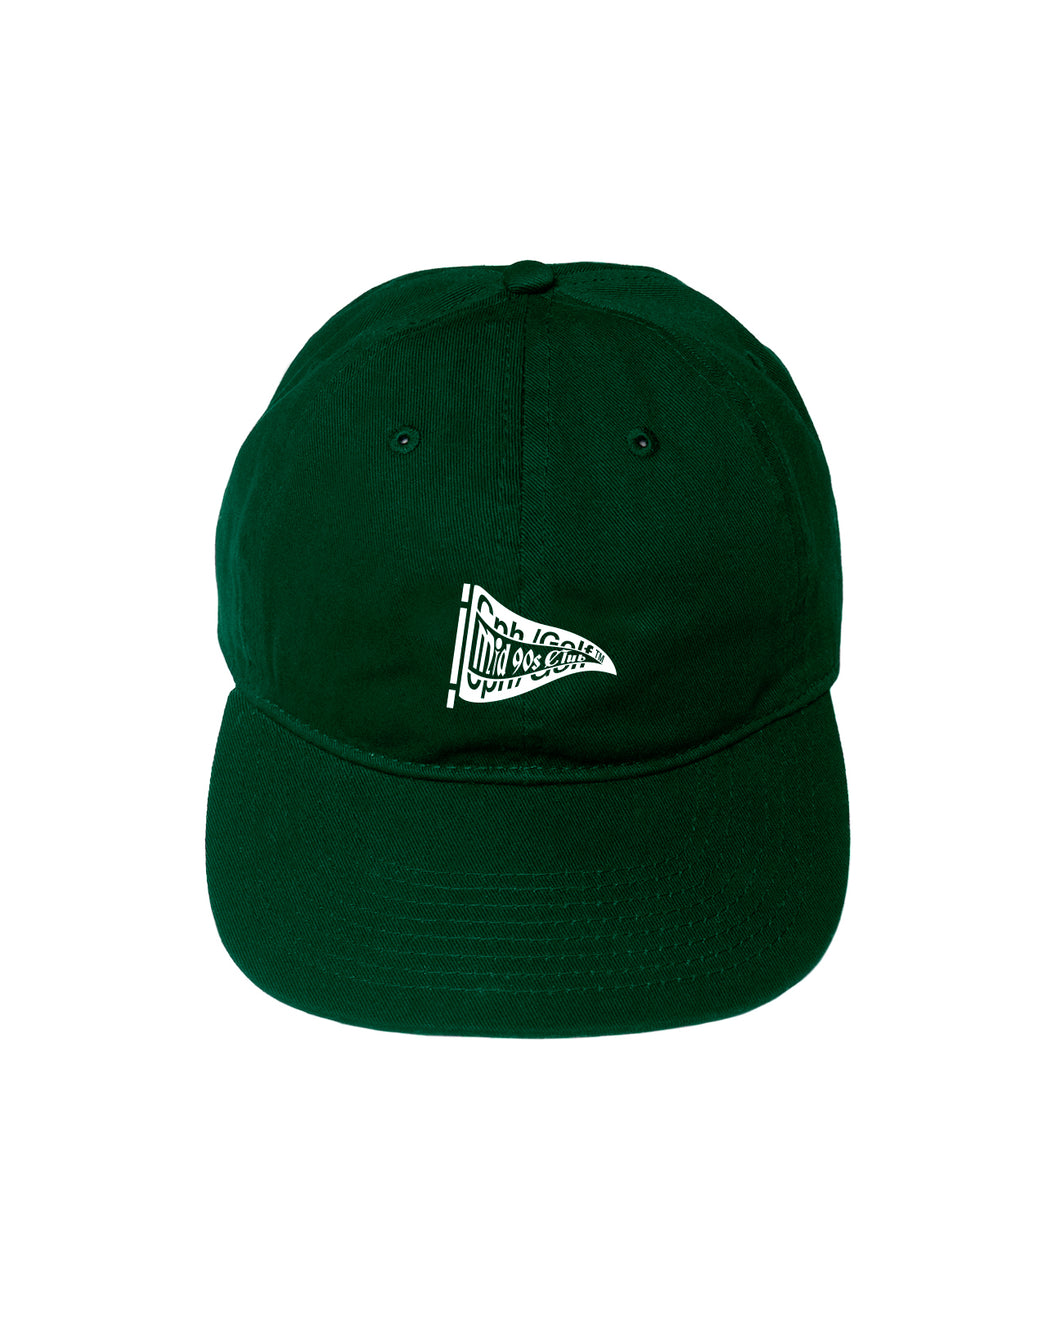 BRIGHT SIDE CAP - Green